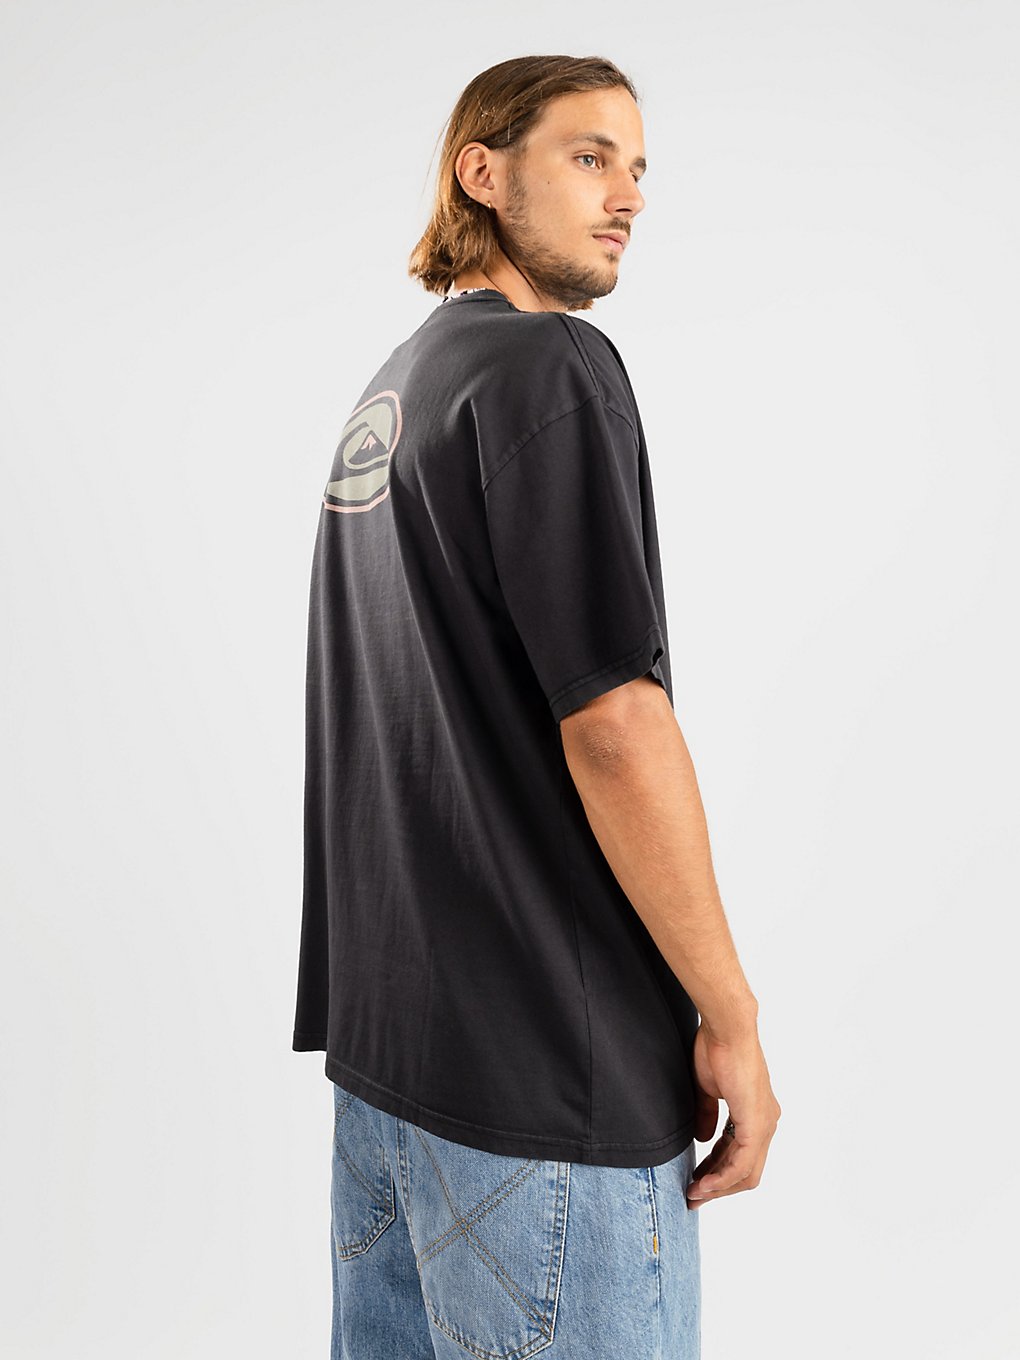 Quiksilver Heritage Oval T-Shirt black kaufen